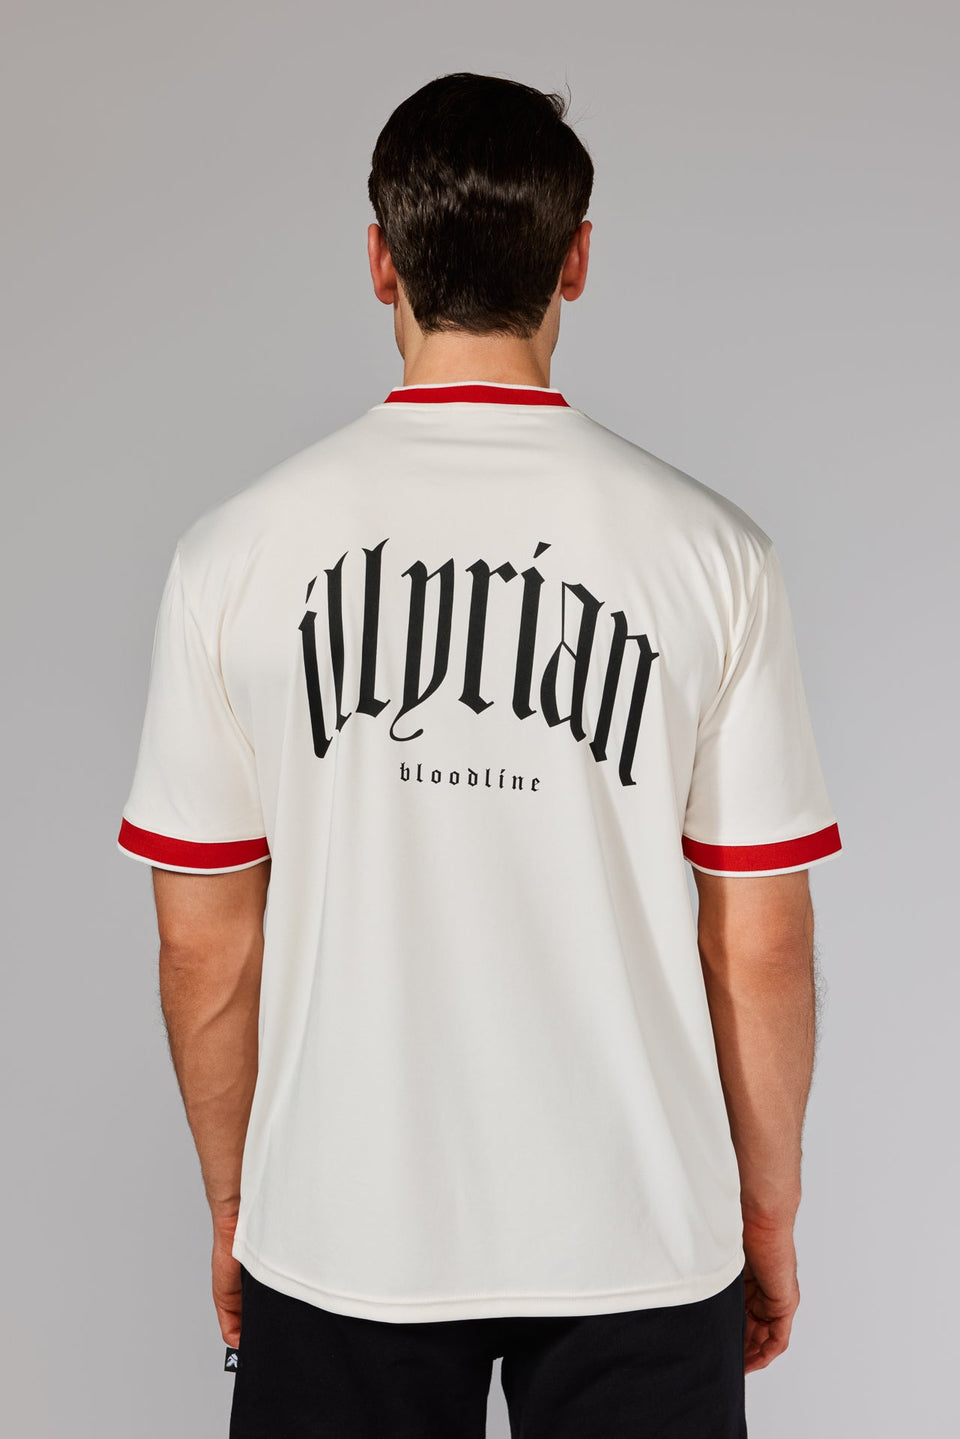 Albania 2024 Jersey - White